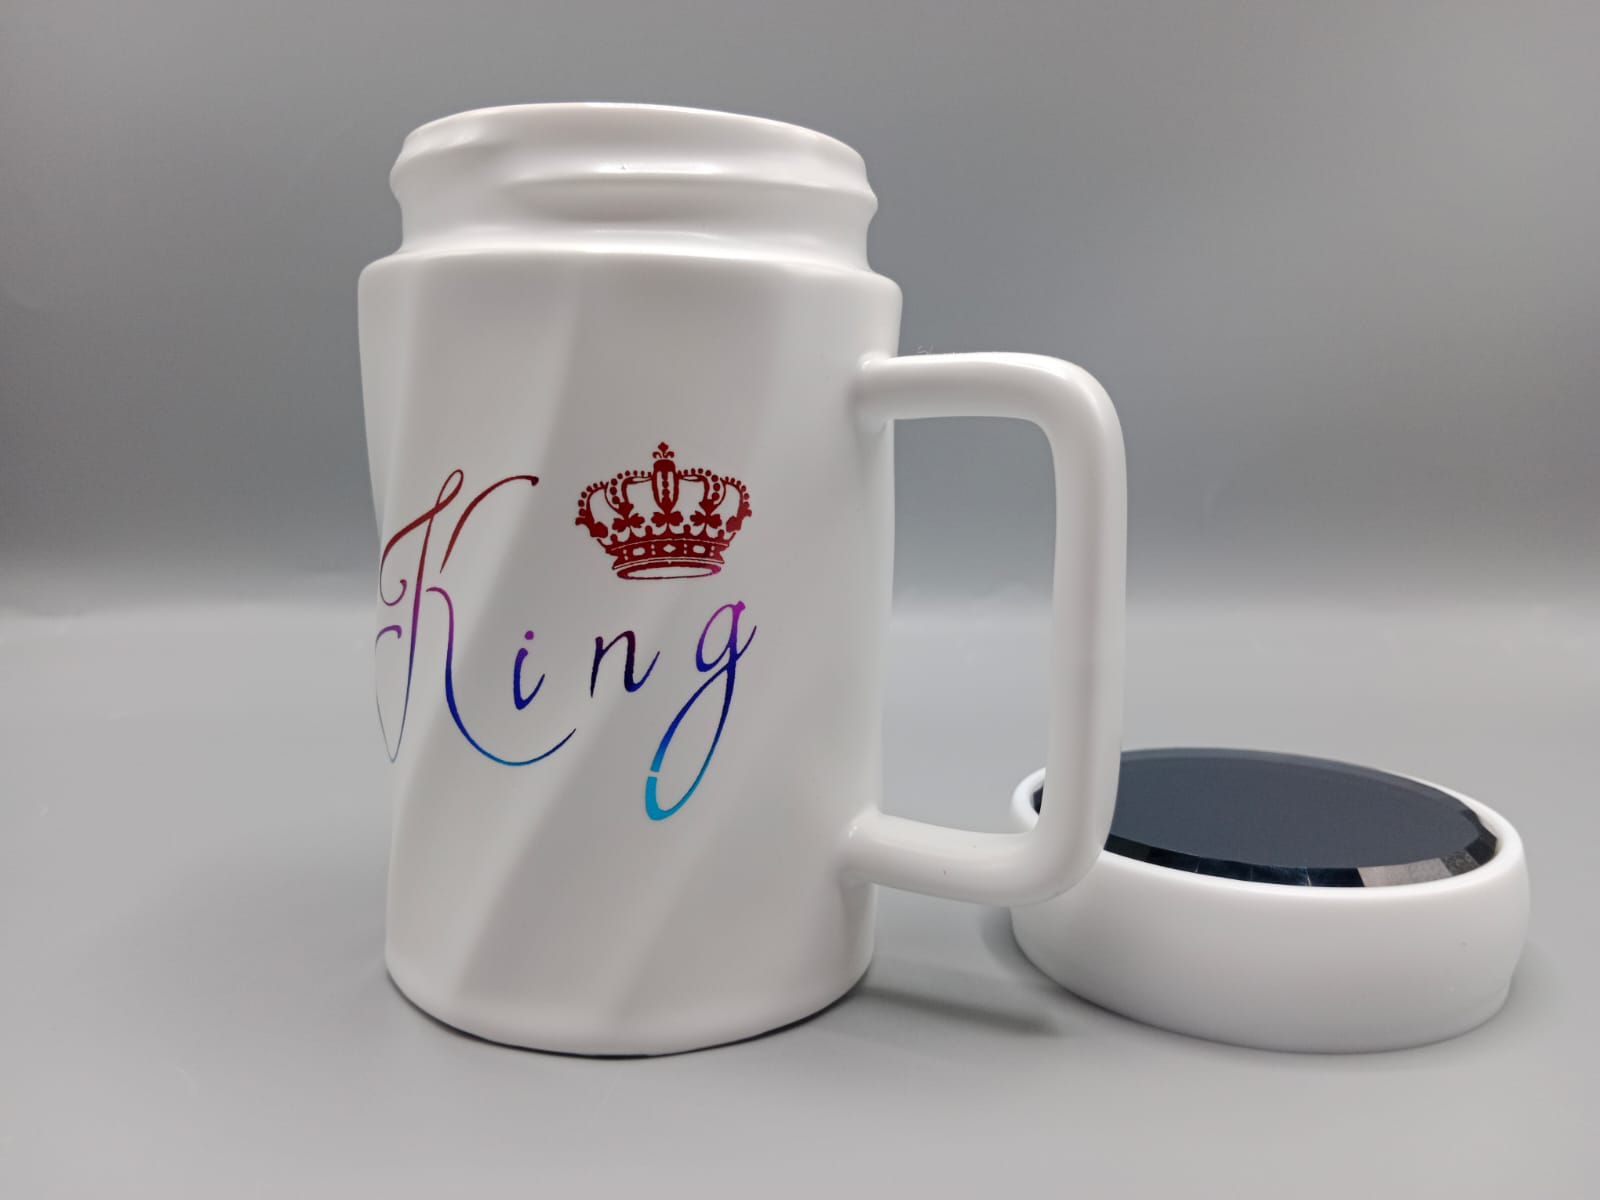 King Ceramic Coffee Mug With Mirrored Lid White (G-22)